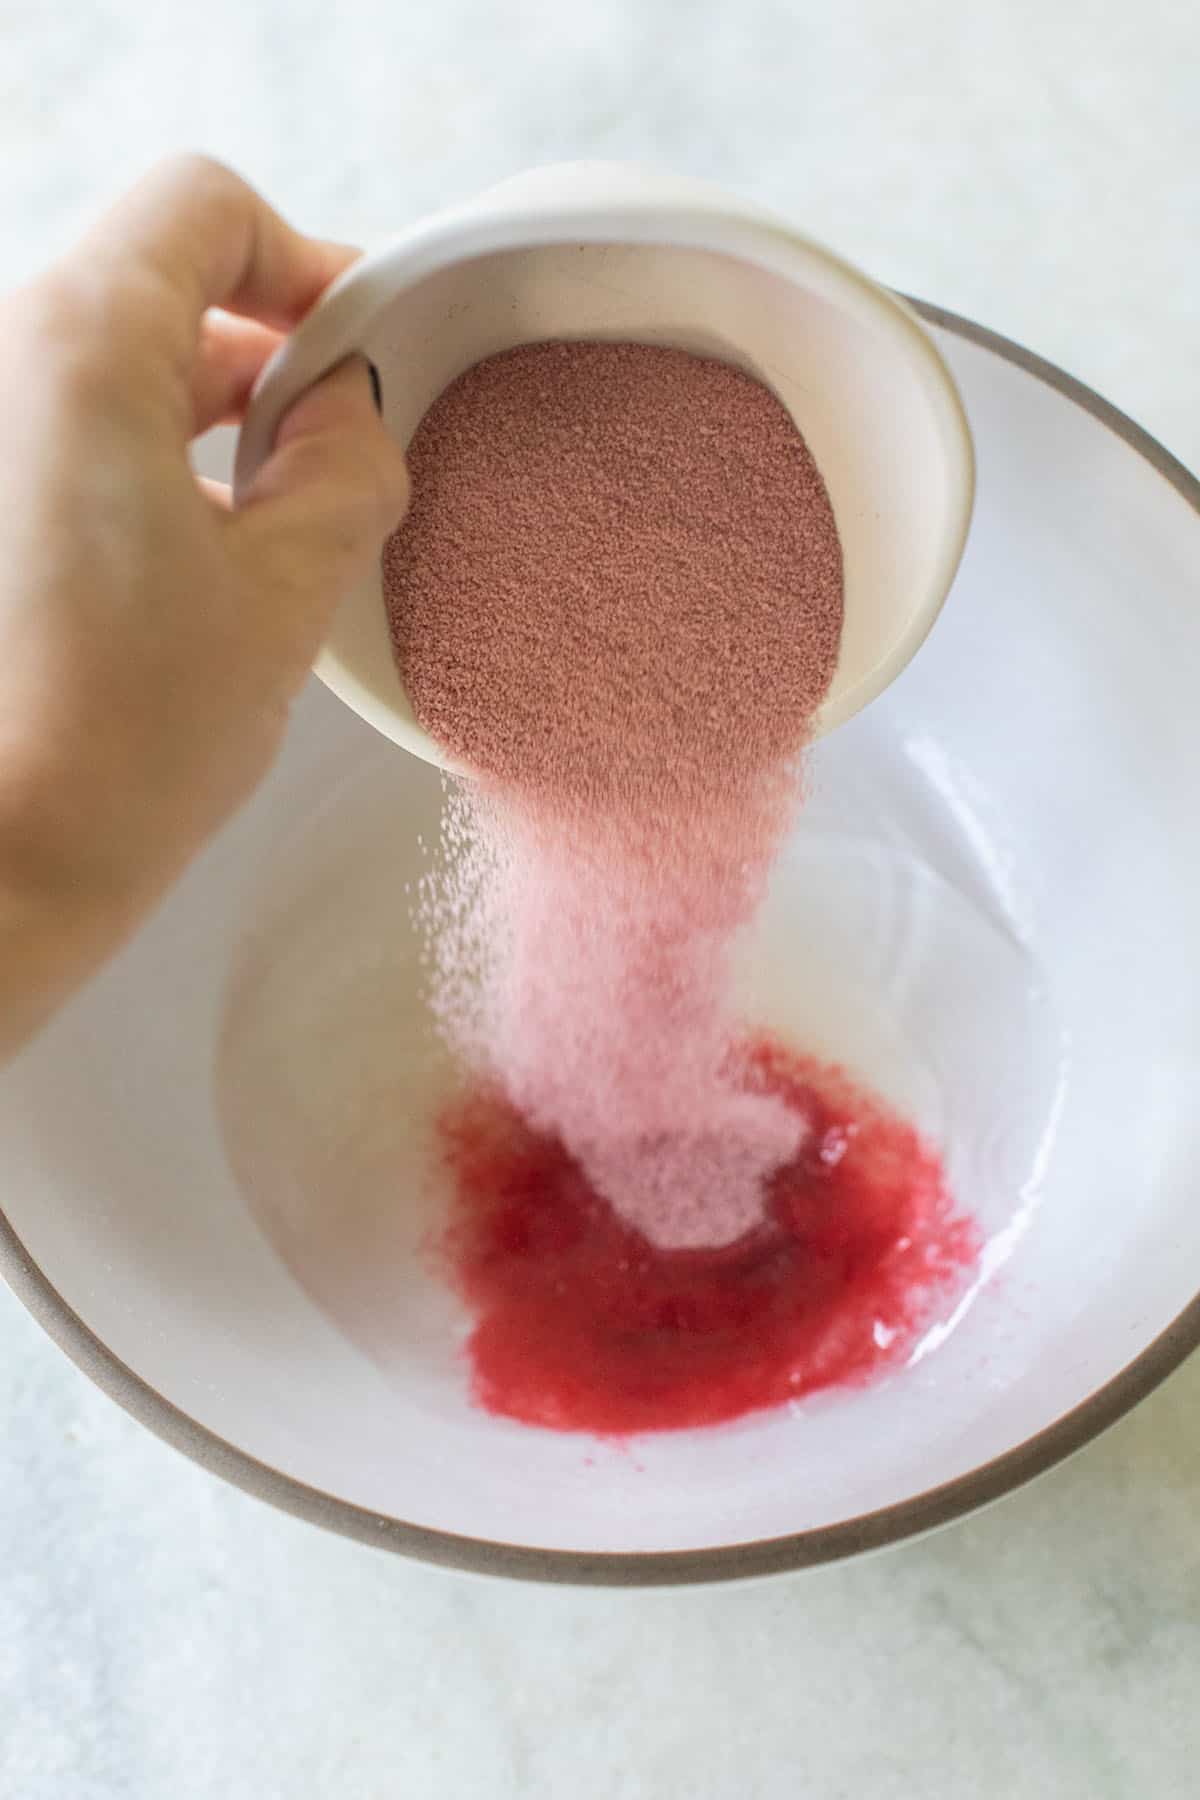 cranberry Jello pouring into gelatin - cranberry jello shots recipe, sugared cranberries, completely dissolved